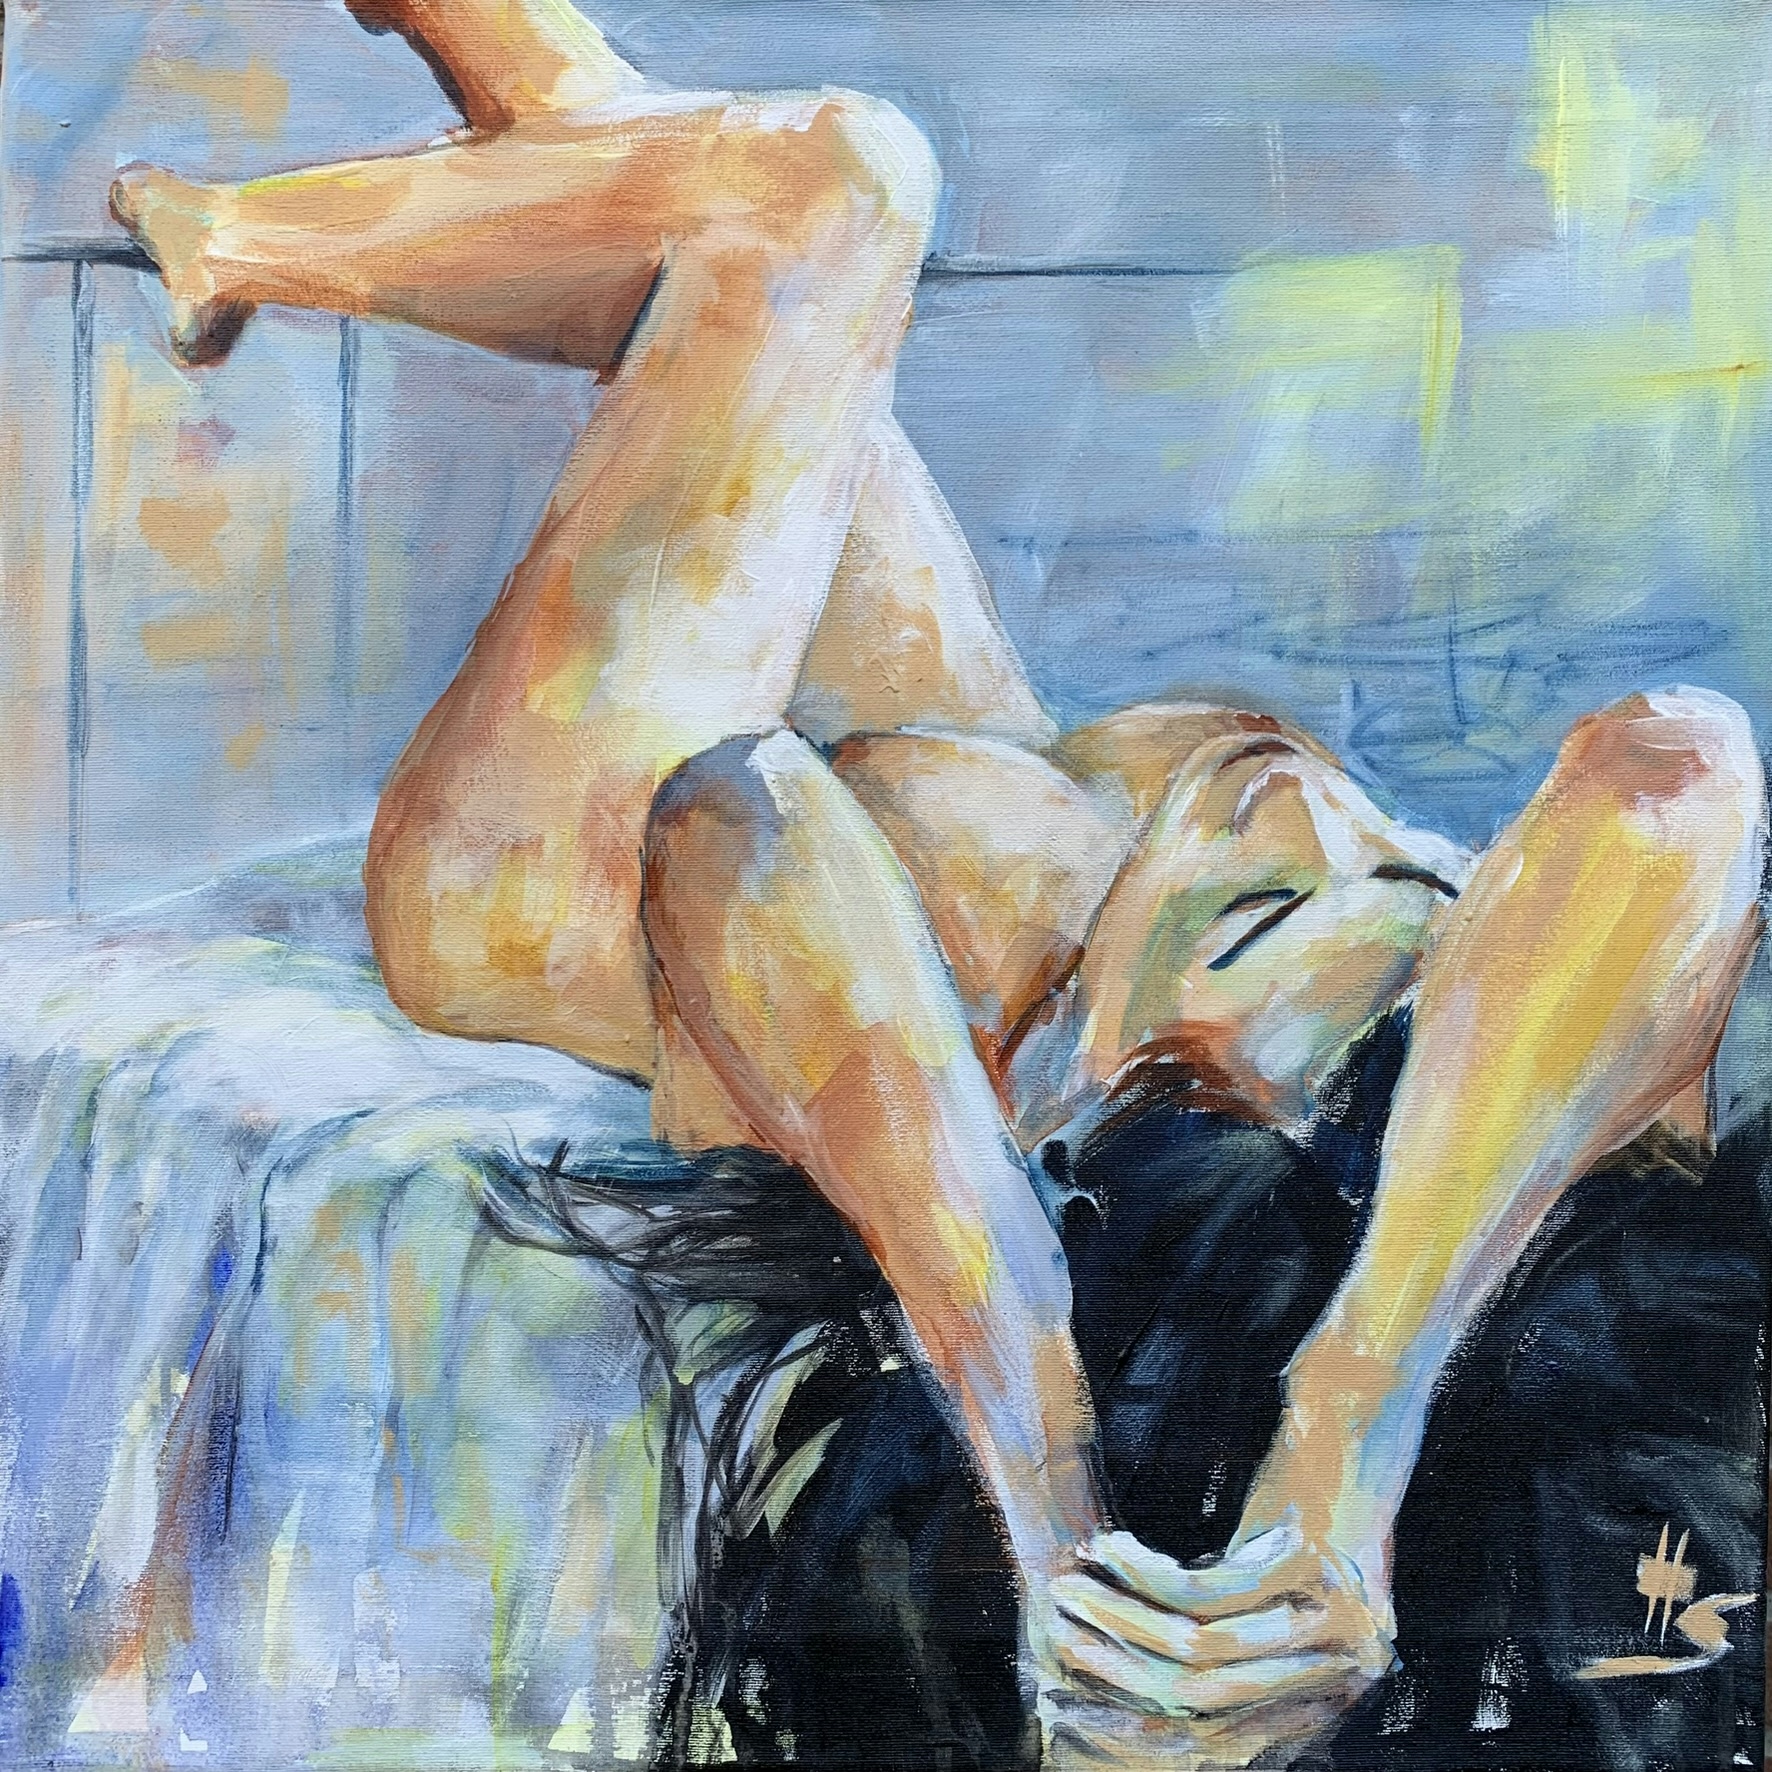 Nude artwork by Heike Schümann depicts a reclining woman